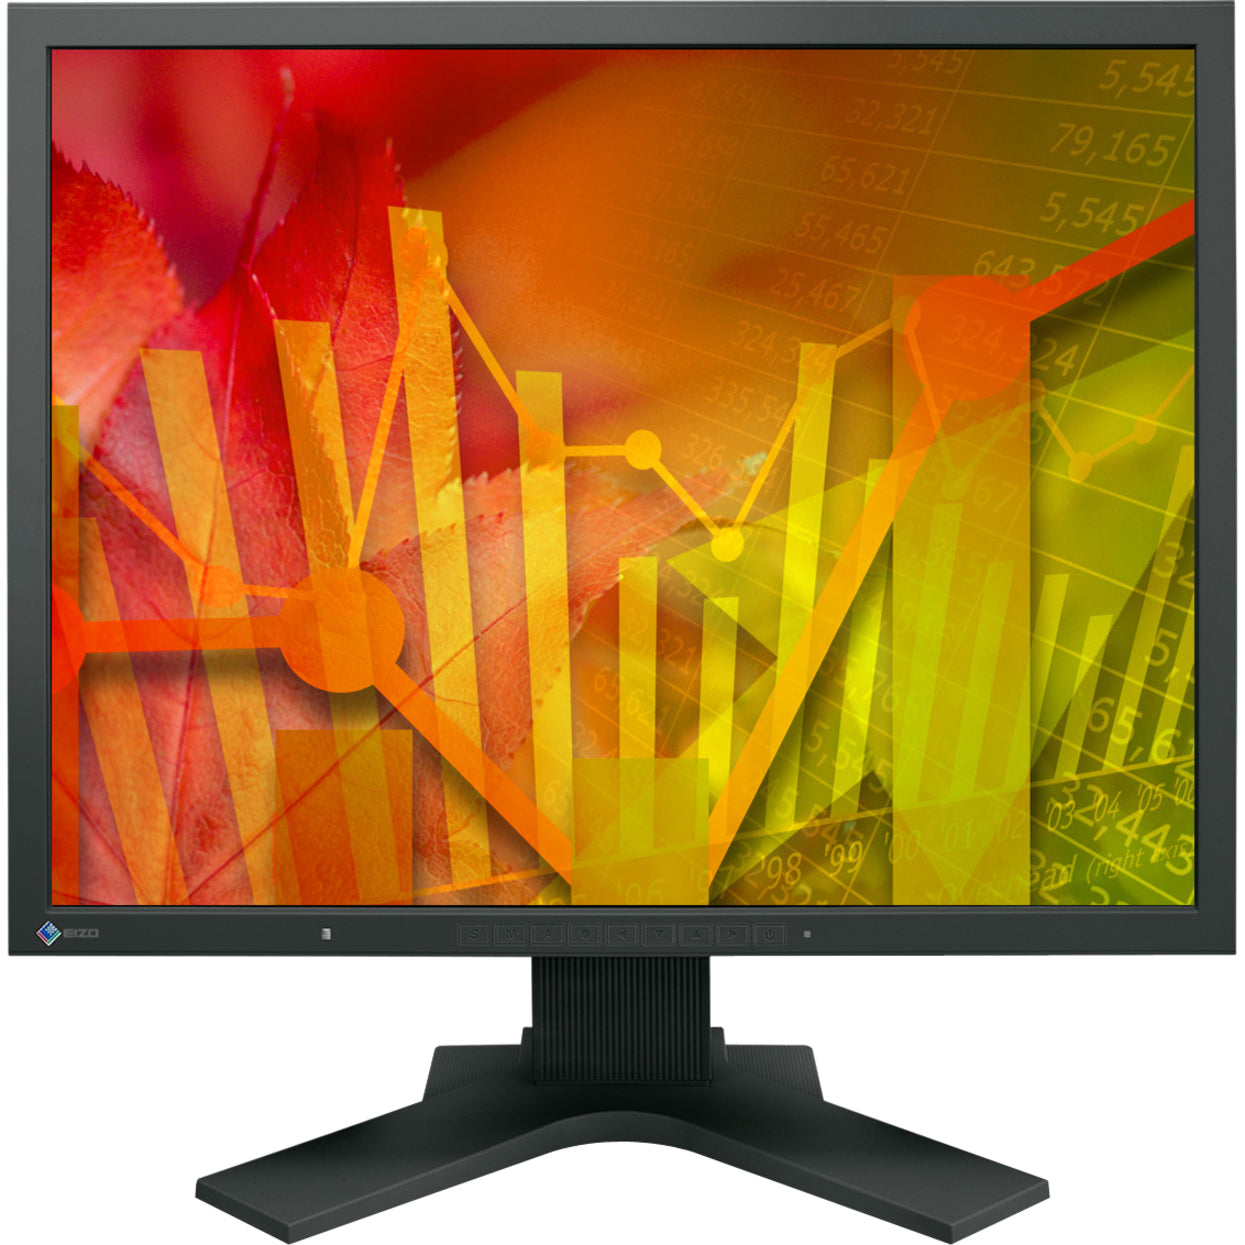 EIZO S2133-BK FlexScan 21.3" LCD Monitor, 4:3, 1600 x 1200, 420 Nit, 1500:1, LED, Black